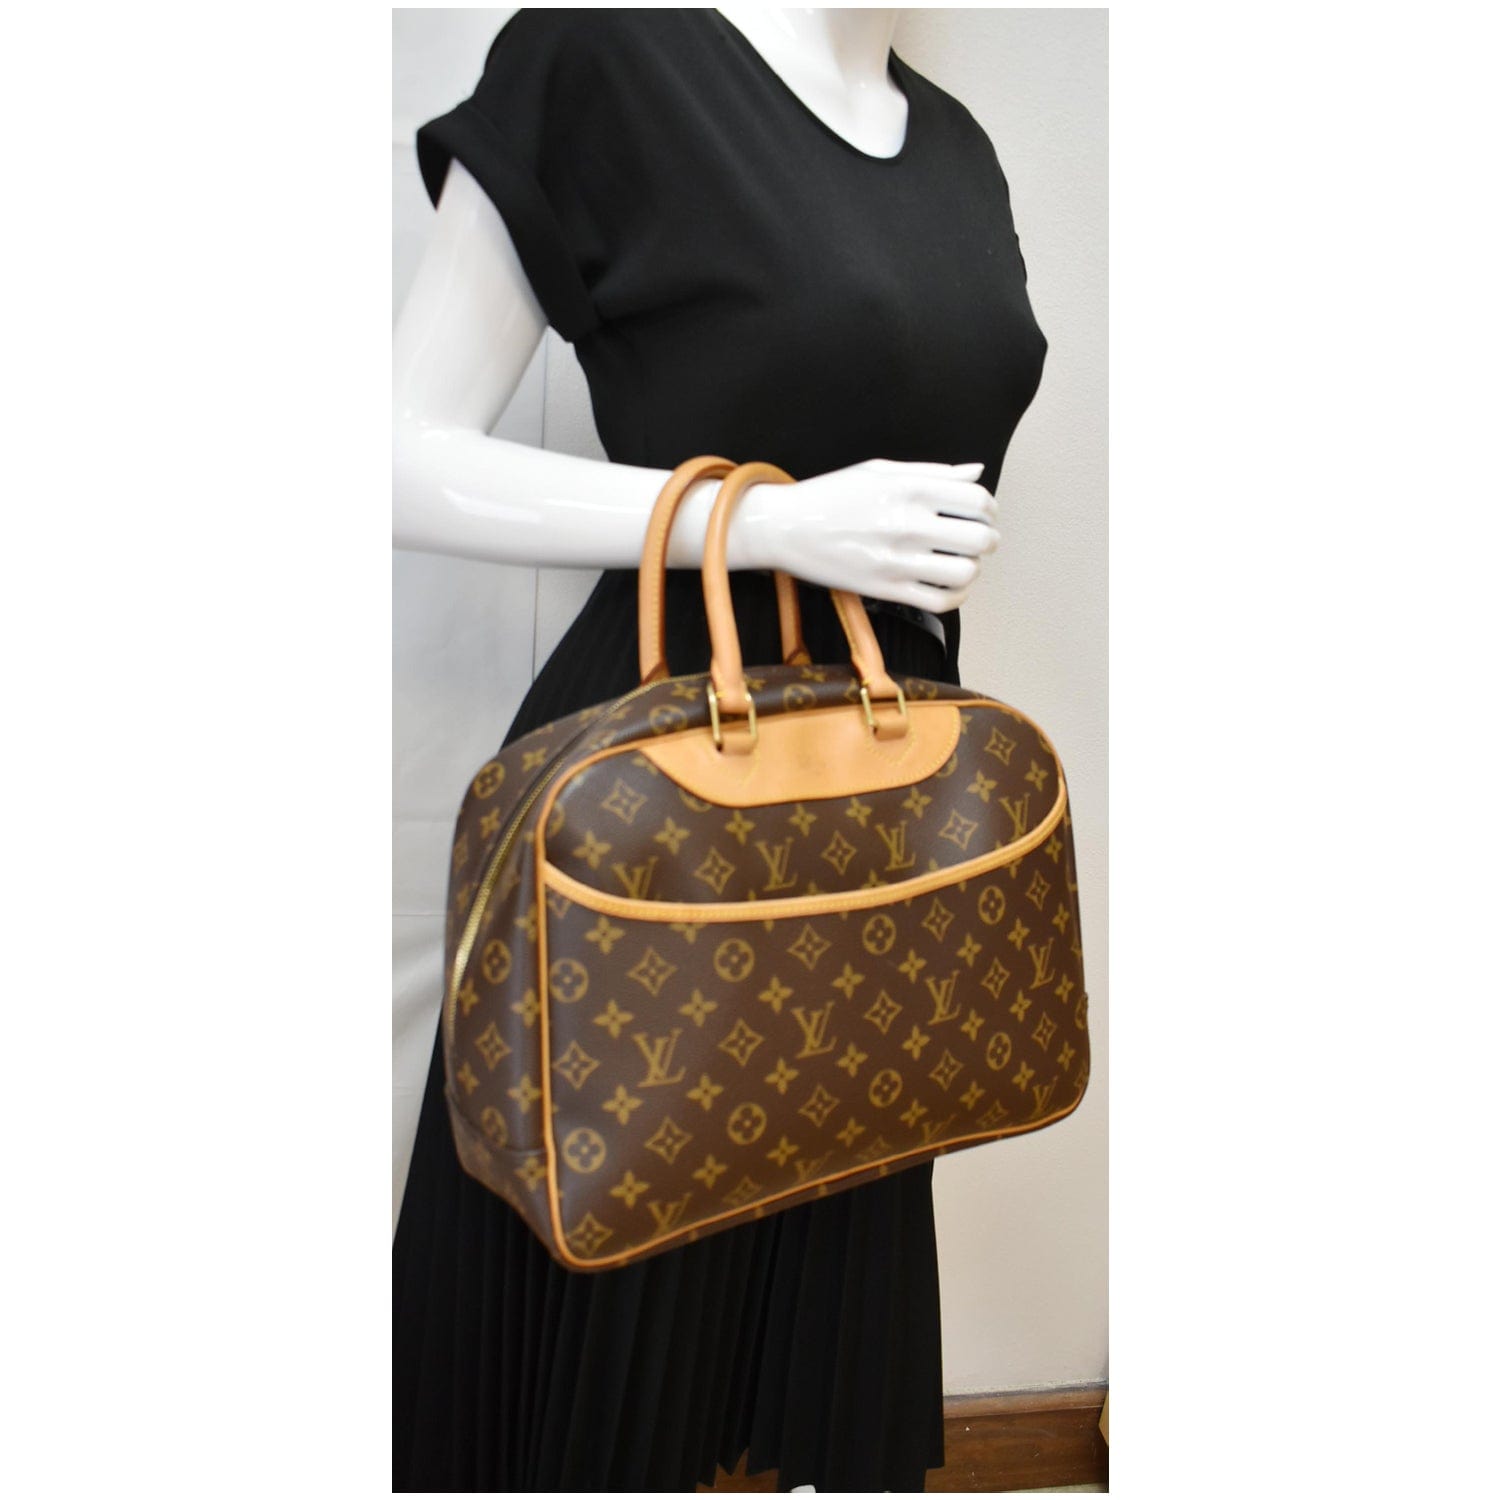 Handbag LOUIS VUITTON model Deauville brown coated canva…